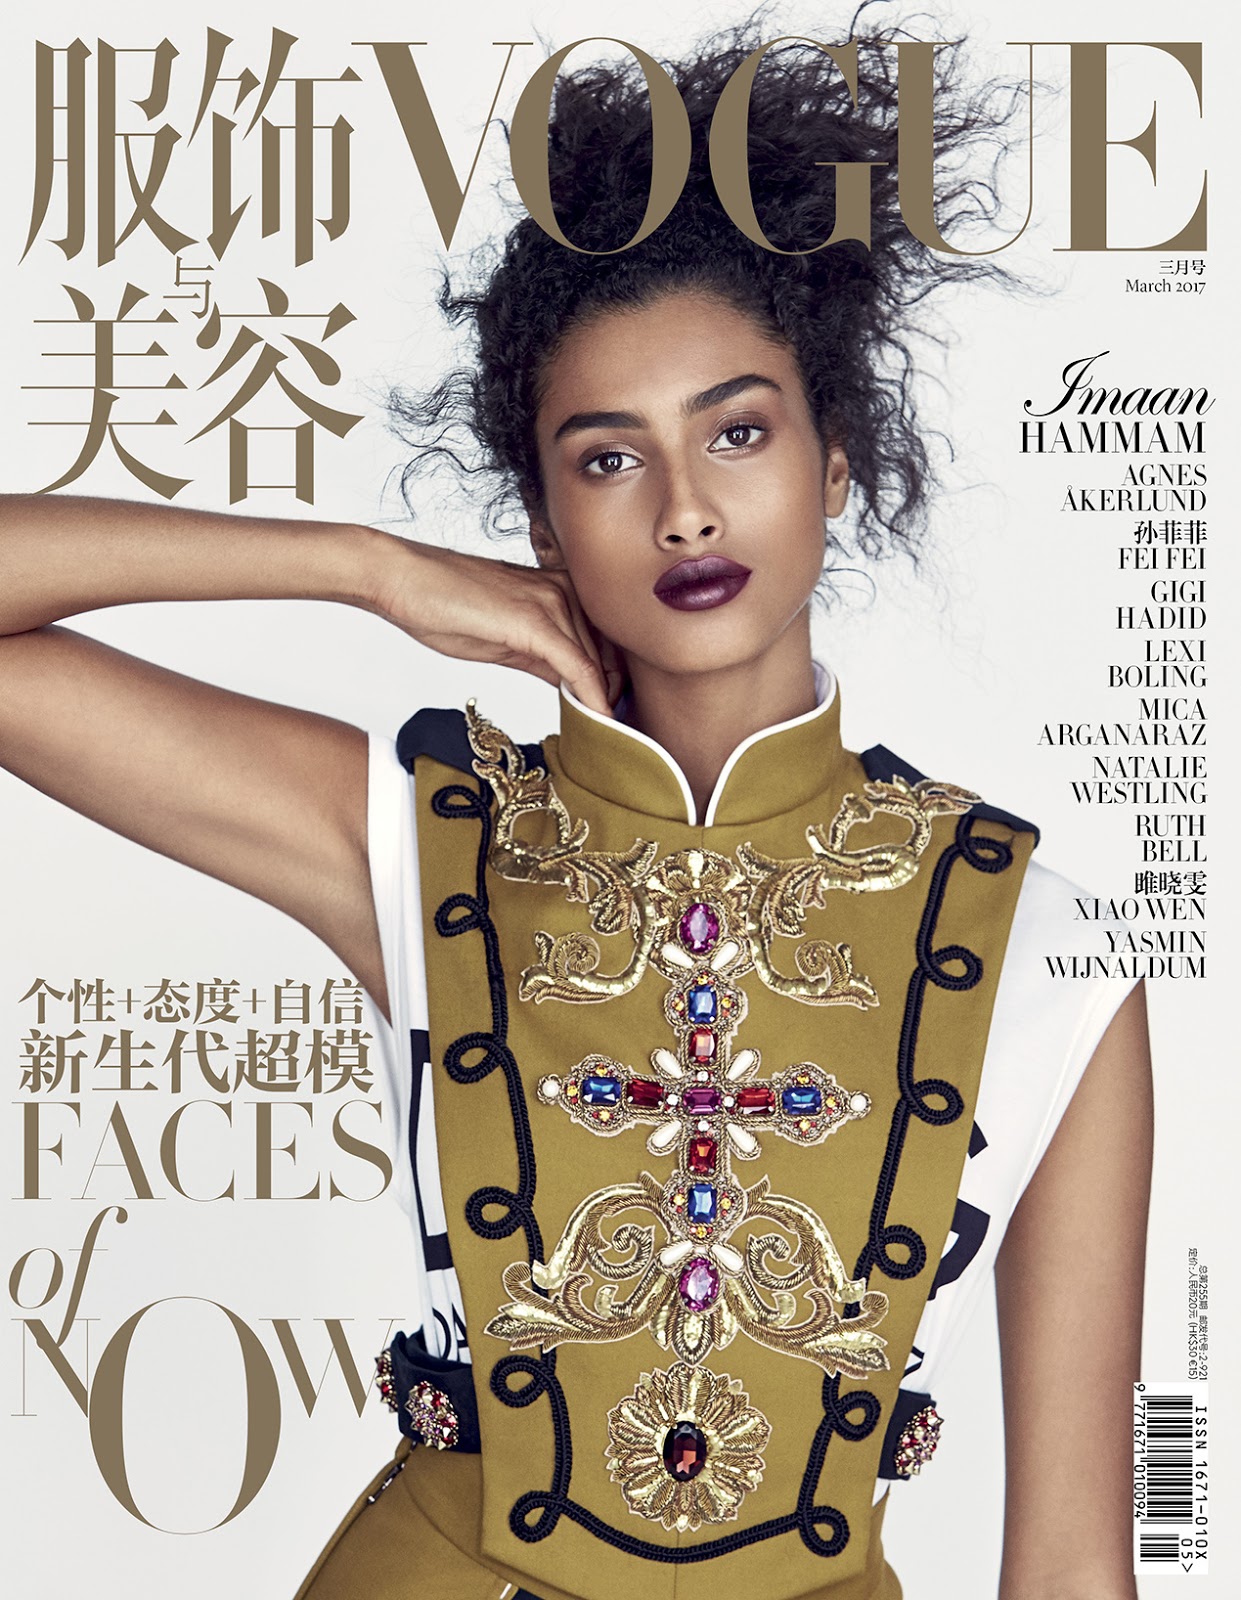 Imaan Hammam en couverture de Vogue